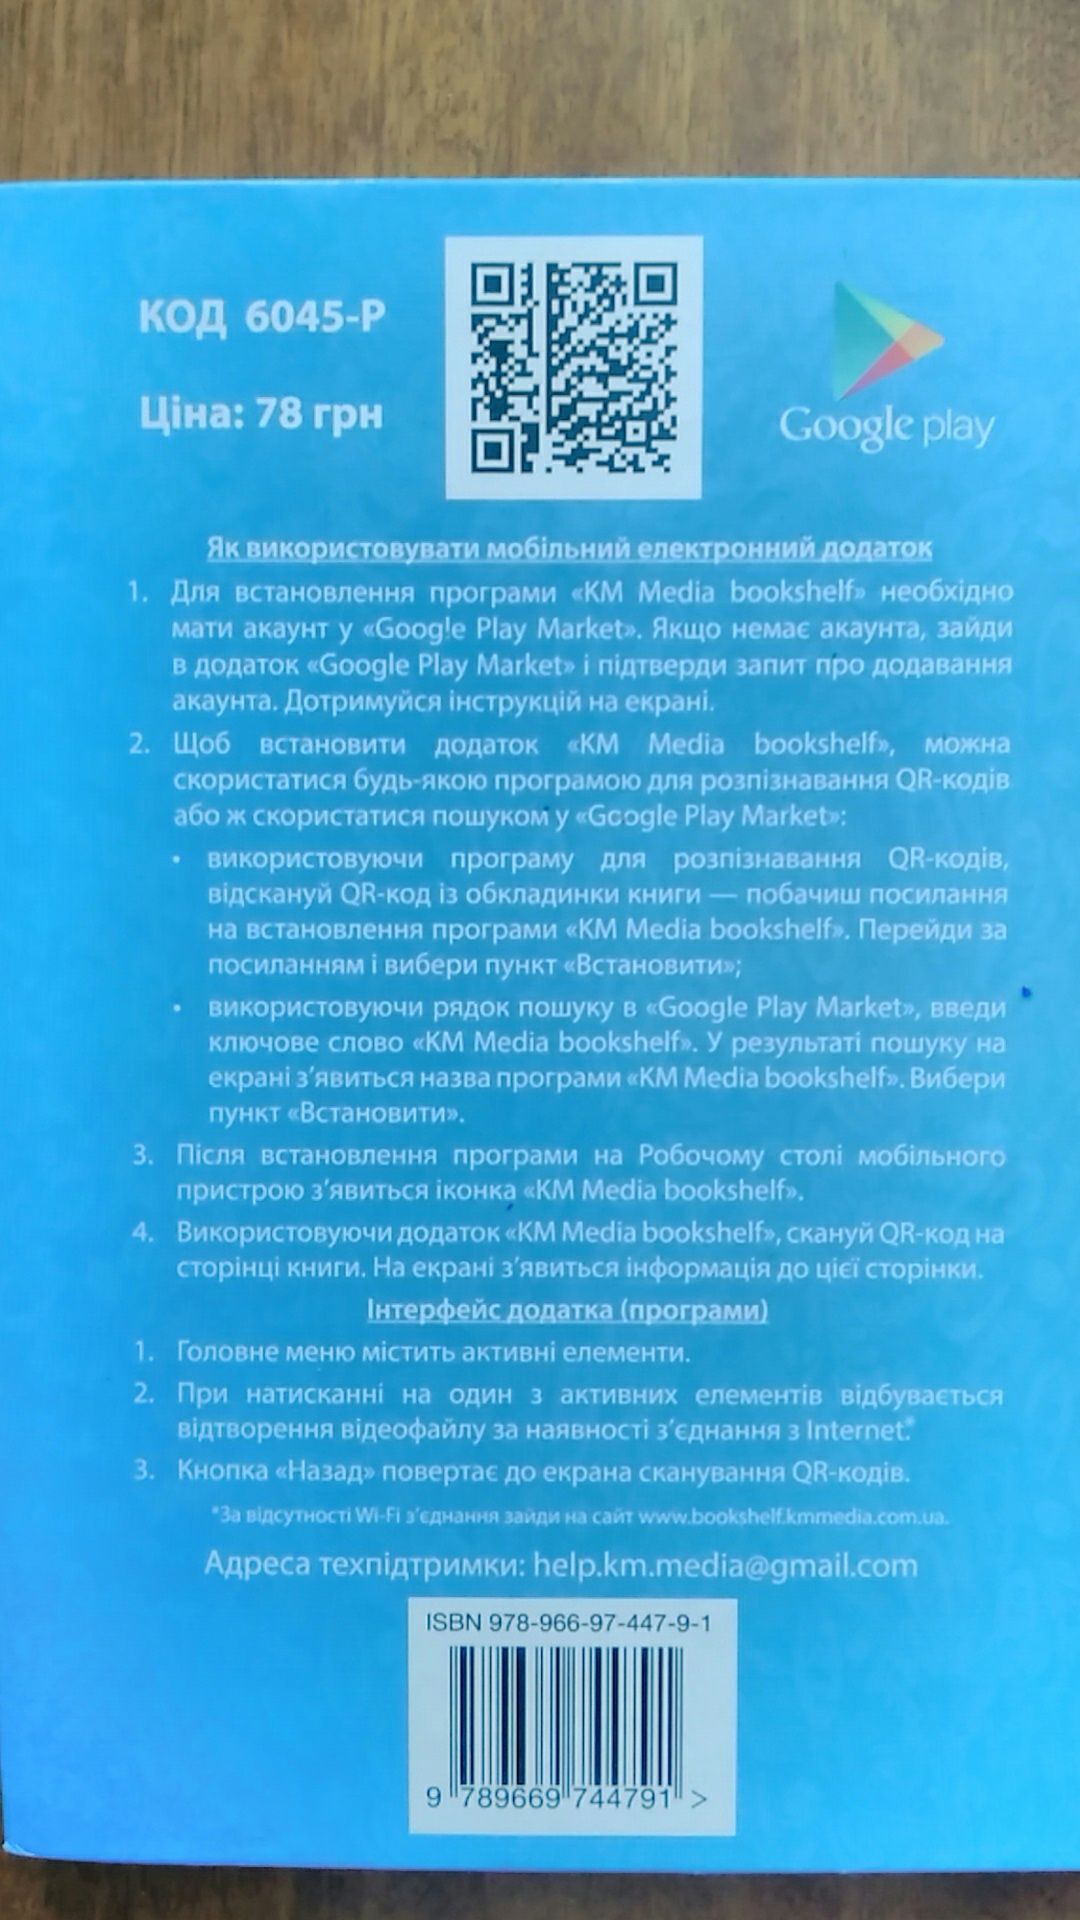 Украiнська мова. Правопис для початковоi школи 1-4 класи